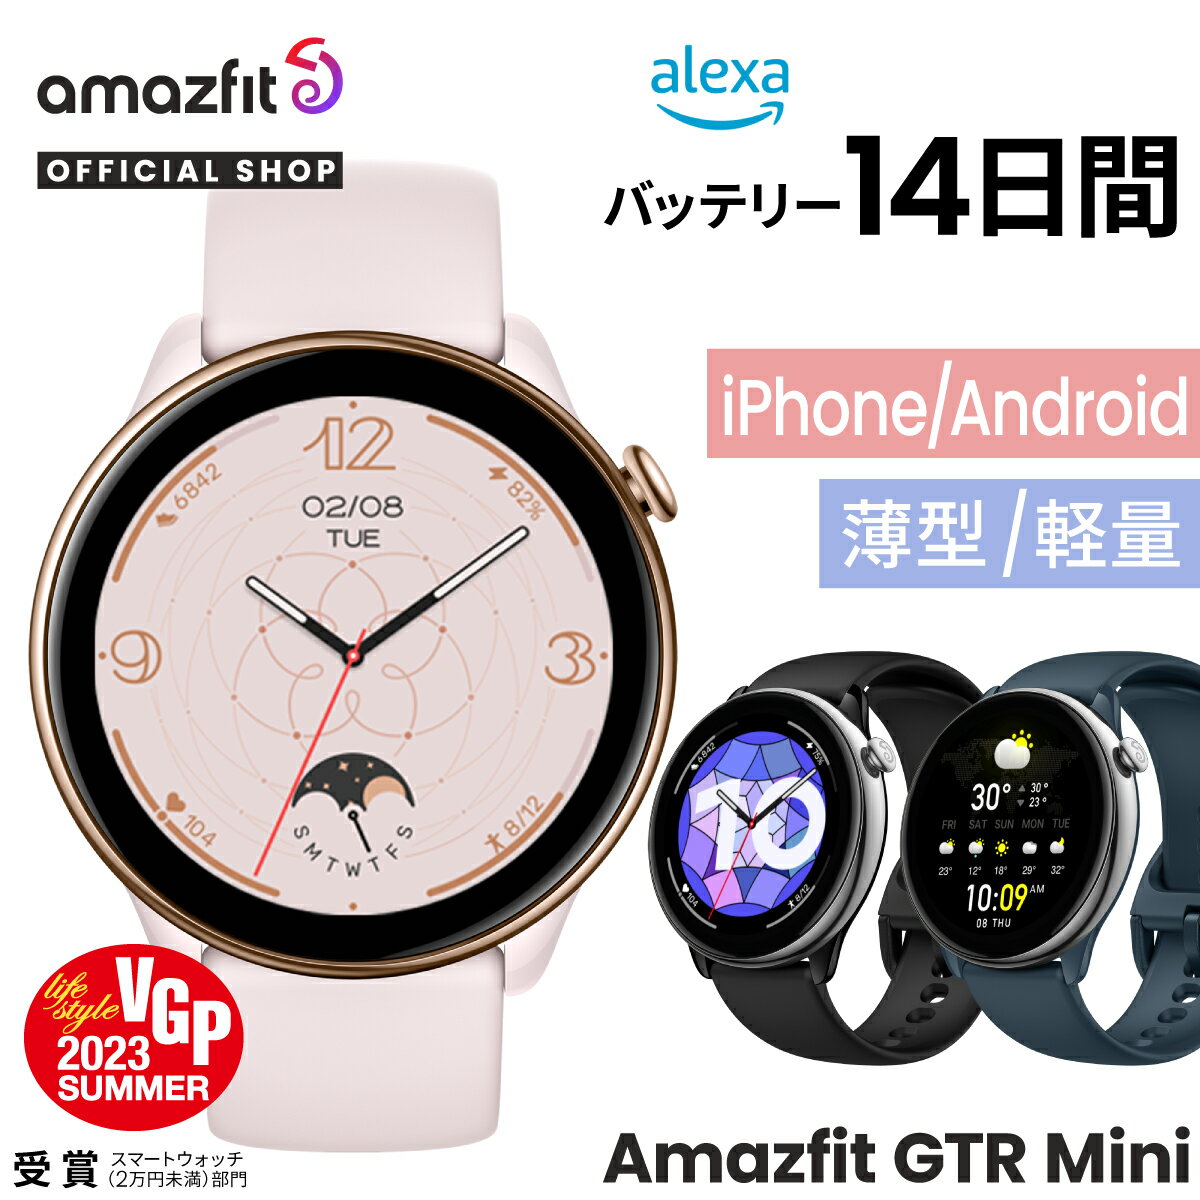 Xiaomi Amazfit GTR スマートウォッチ Amazfit GTR Mini スマートウォッチ 血中酸素 睡眠 ストレス レディース メンズ 女性 男性 android iphone対応 line通知 常時表示 着信 振動 音楽再生 丸形 丸型 着信通知 GPS 生理周期 腕時計 ブランド